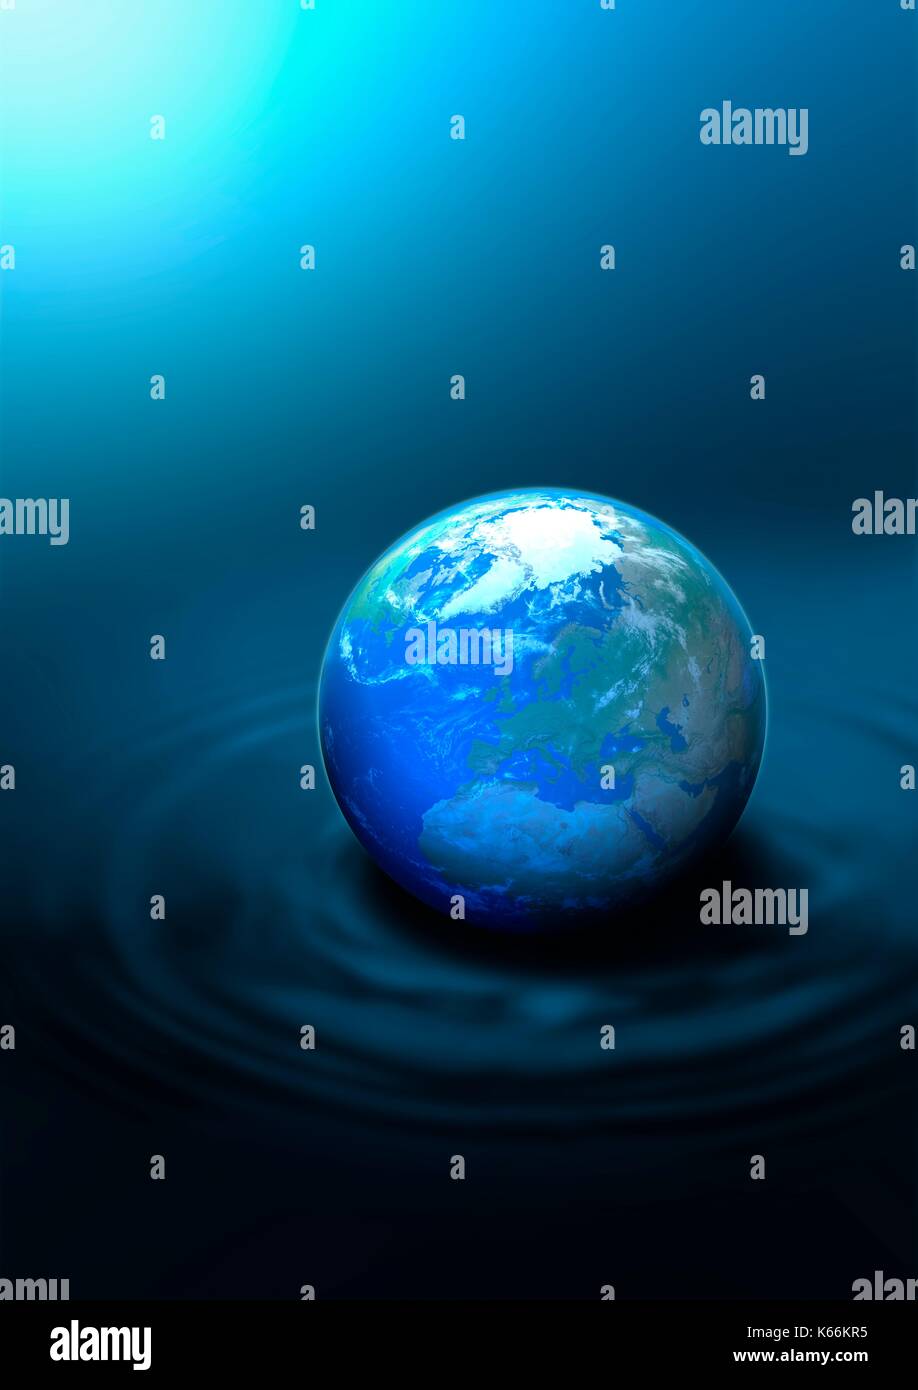 Planet earth, illustration. Stock Photo